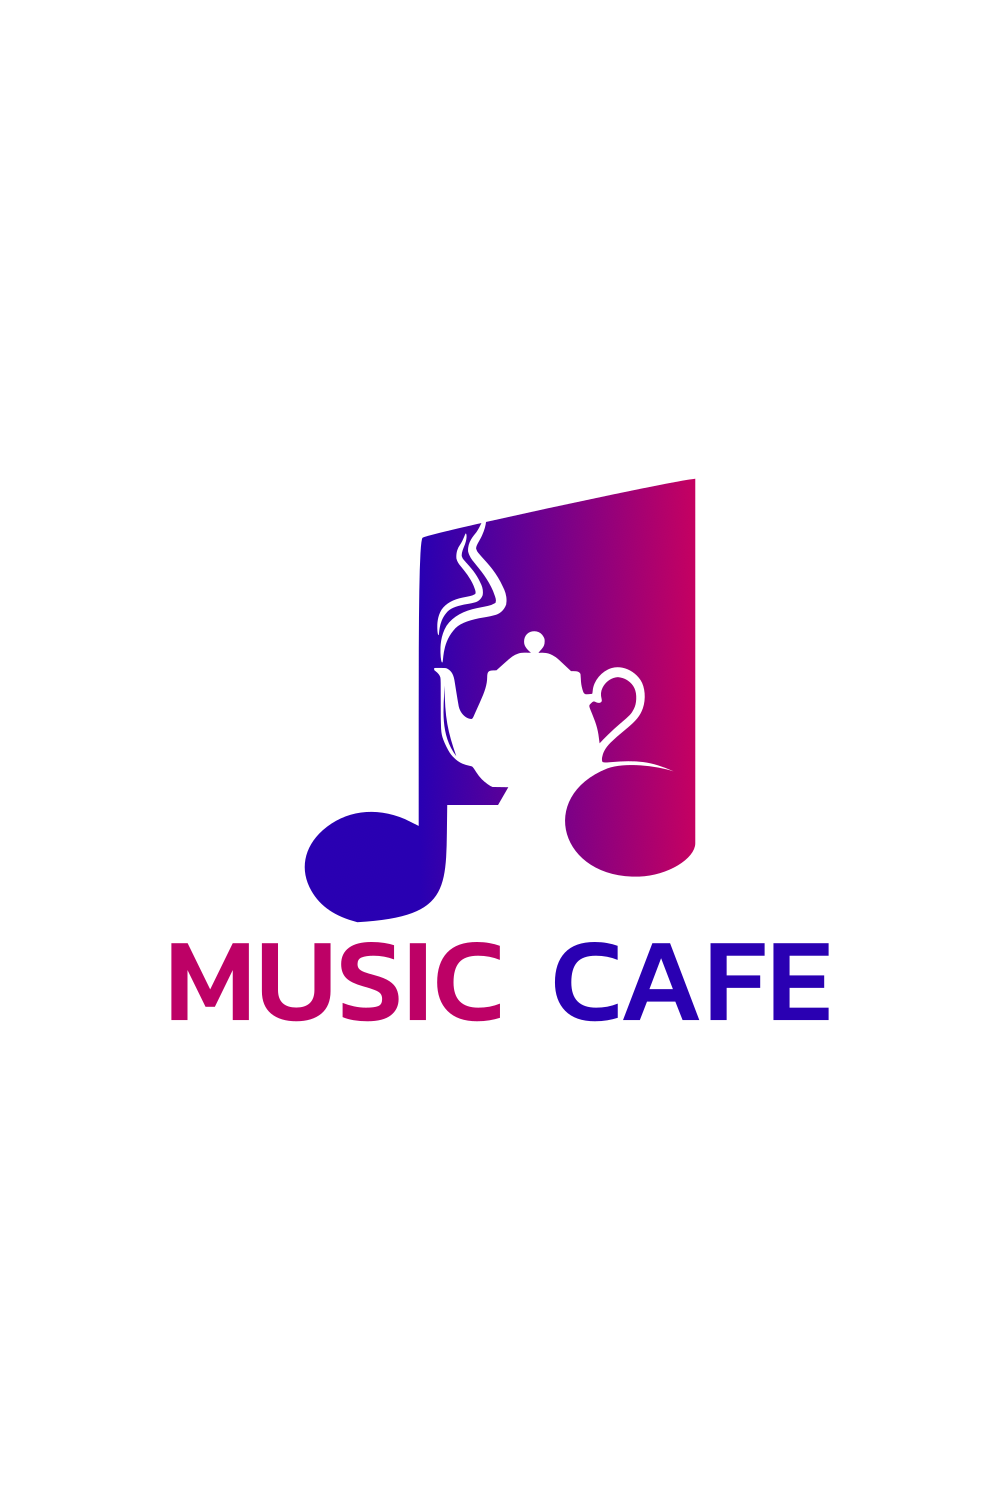 Music and Tea Pot Sign Logo Design pinterest image.